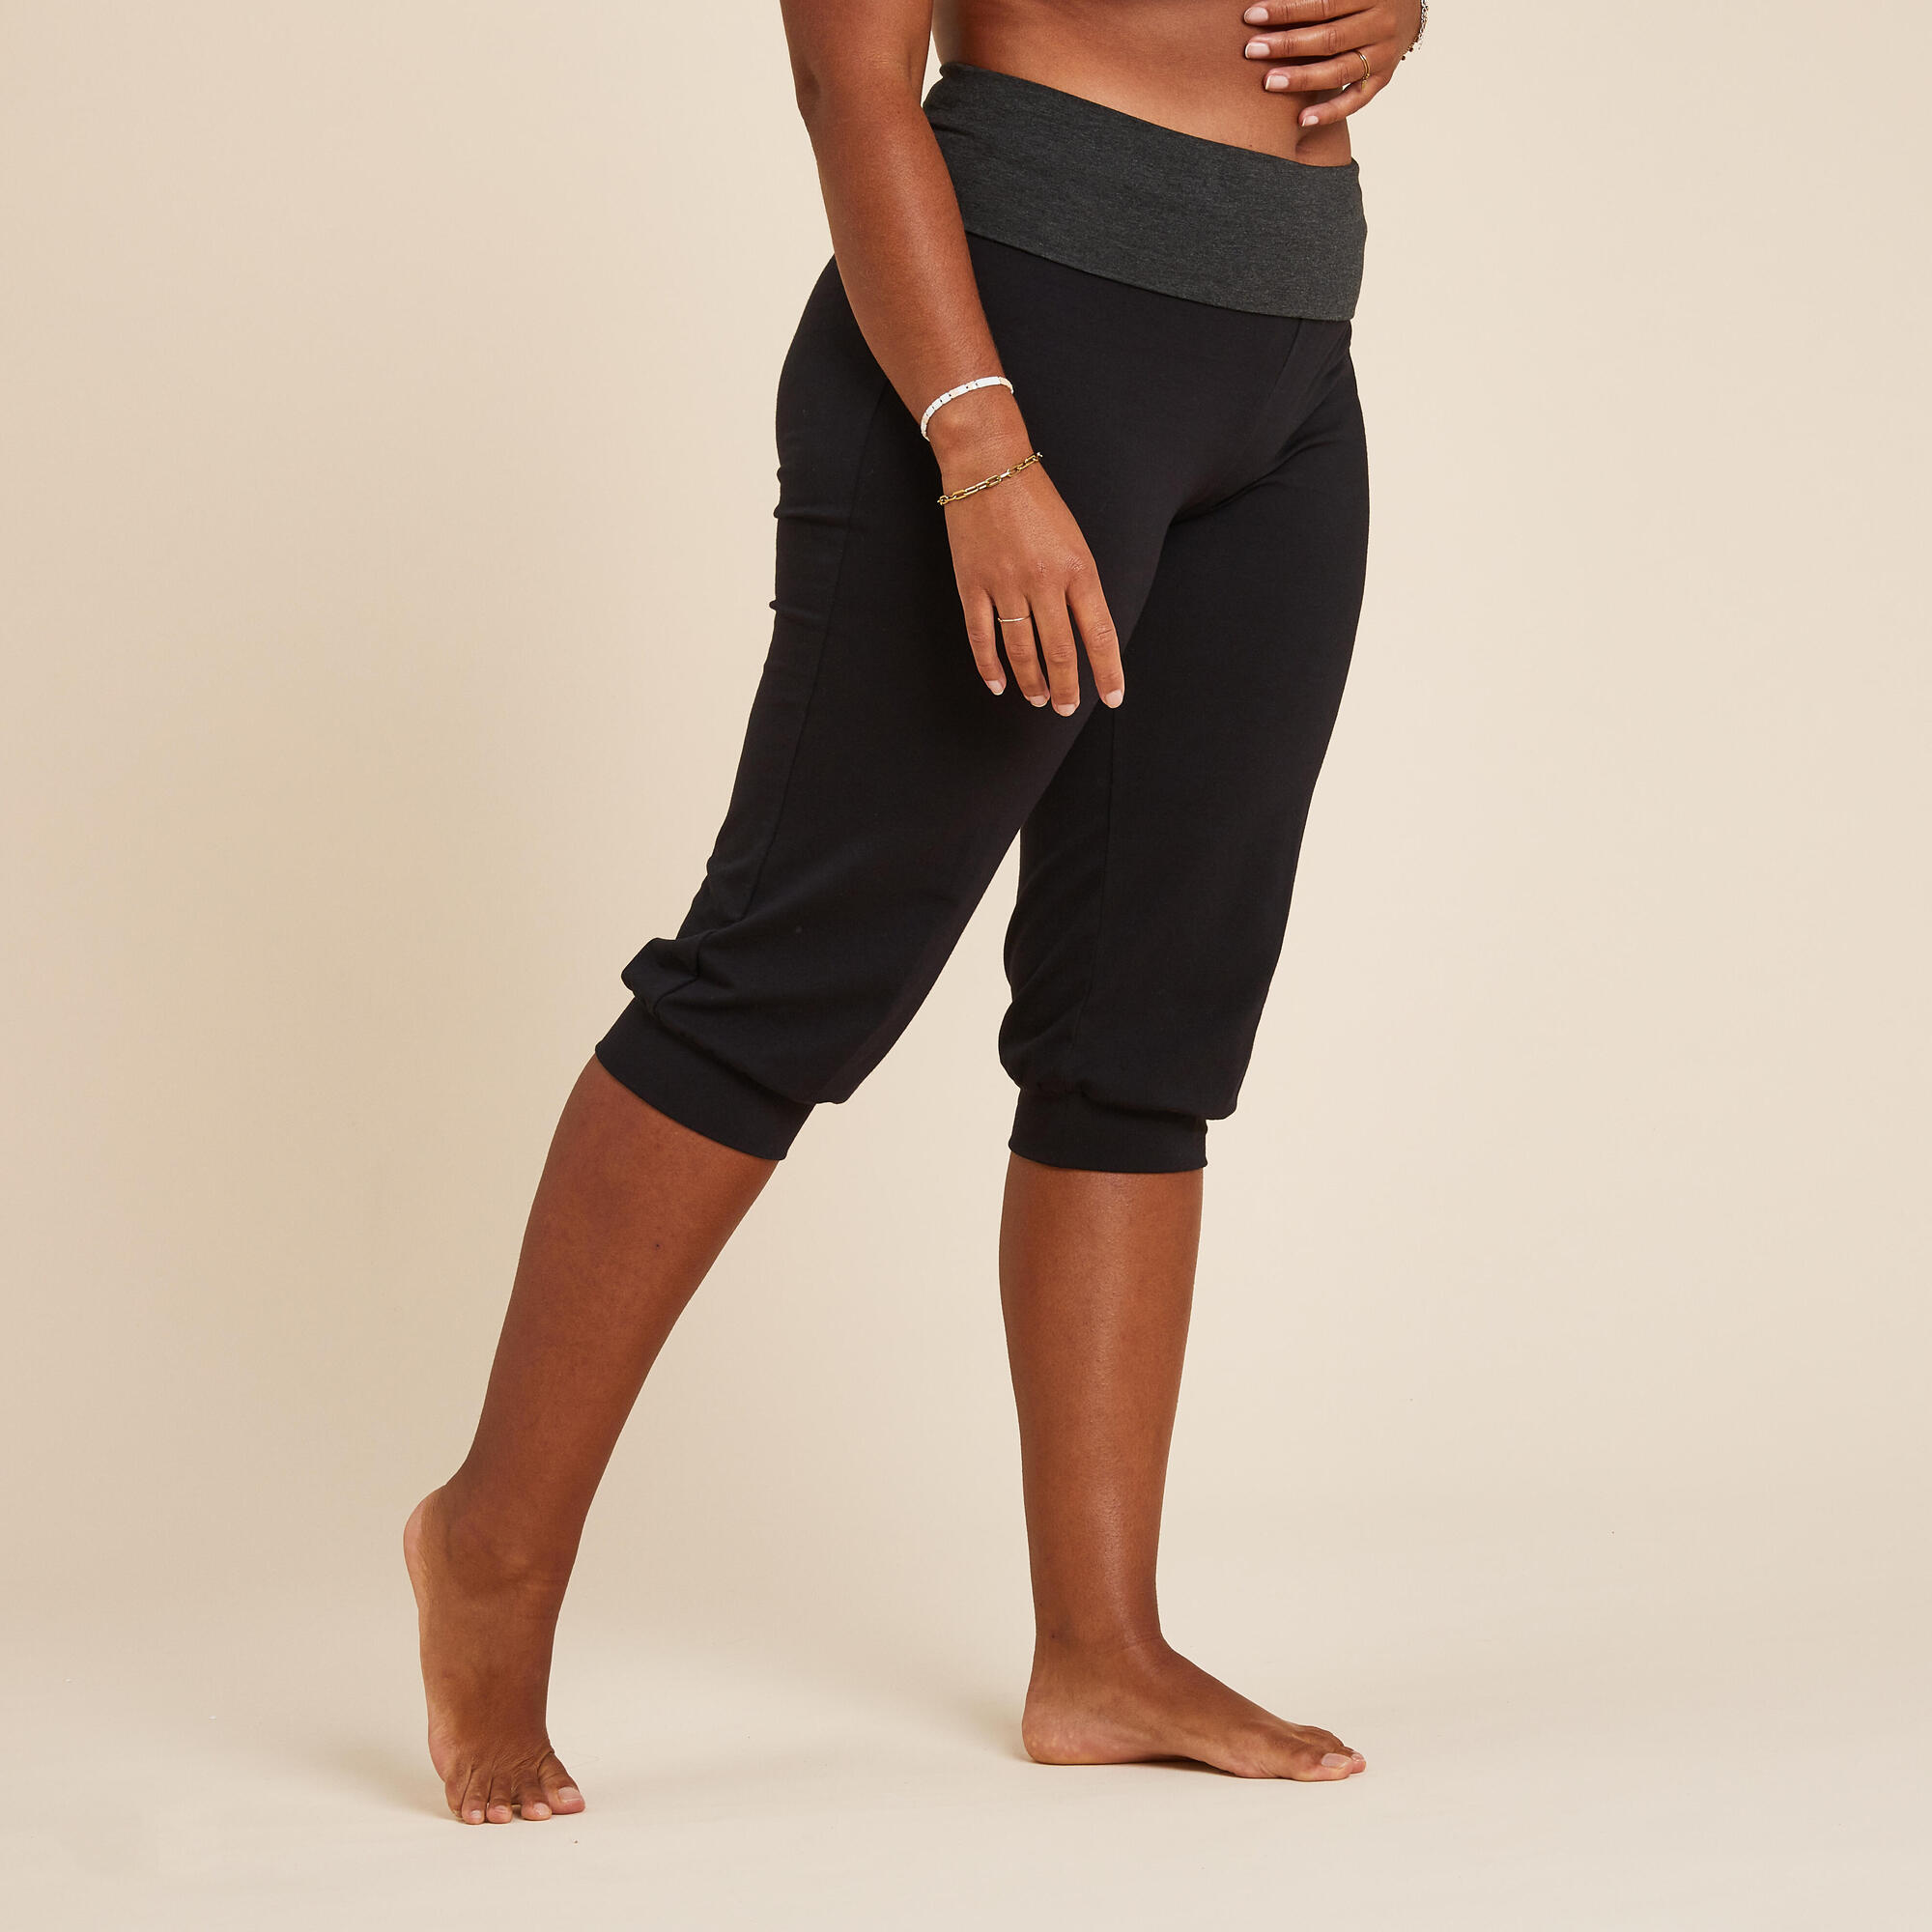 500 Women's Fitness Cardio Training Shorts - Black